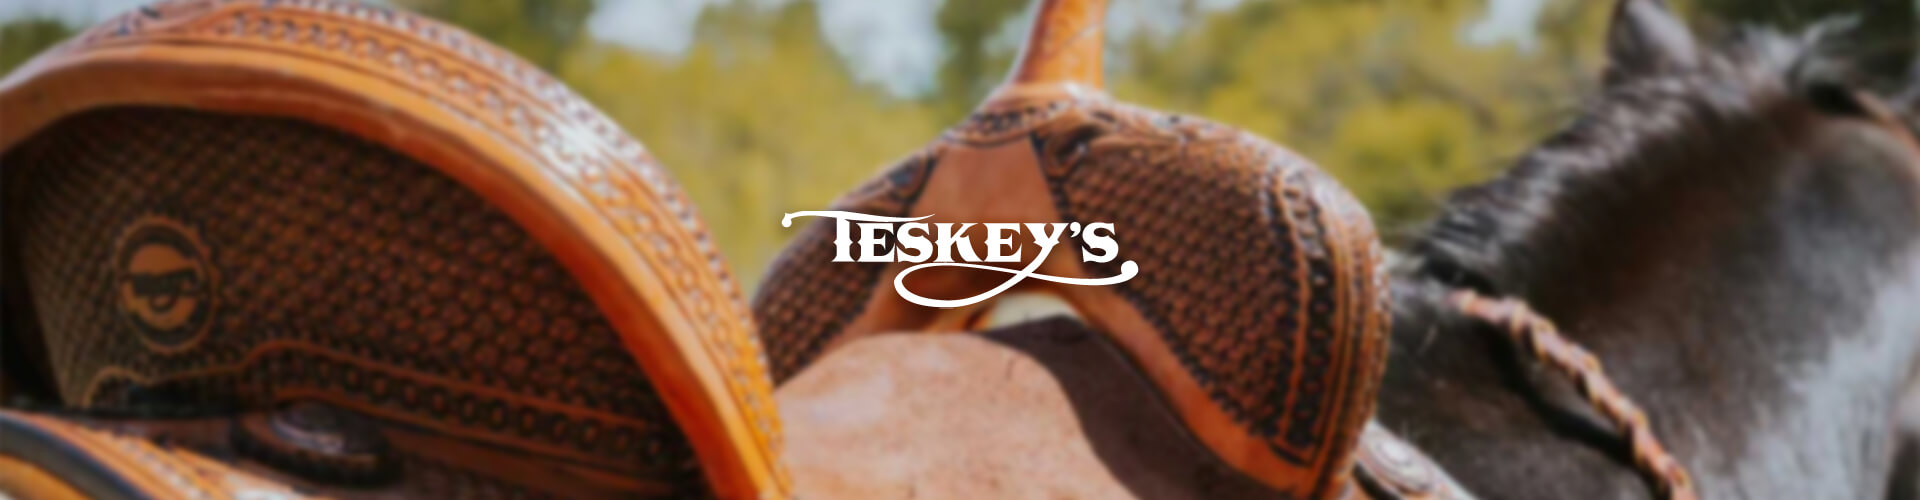 Teskey’s Saddle Shop banner